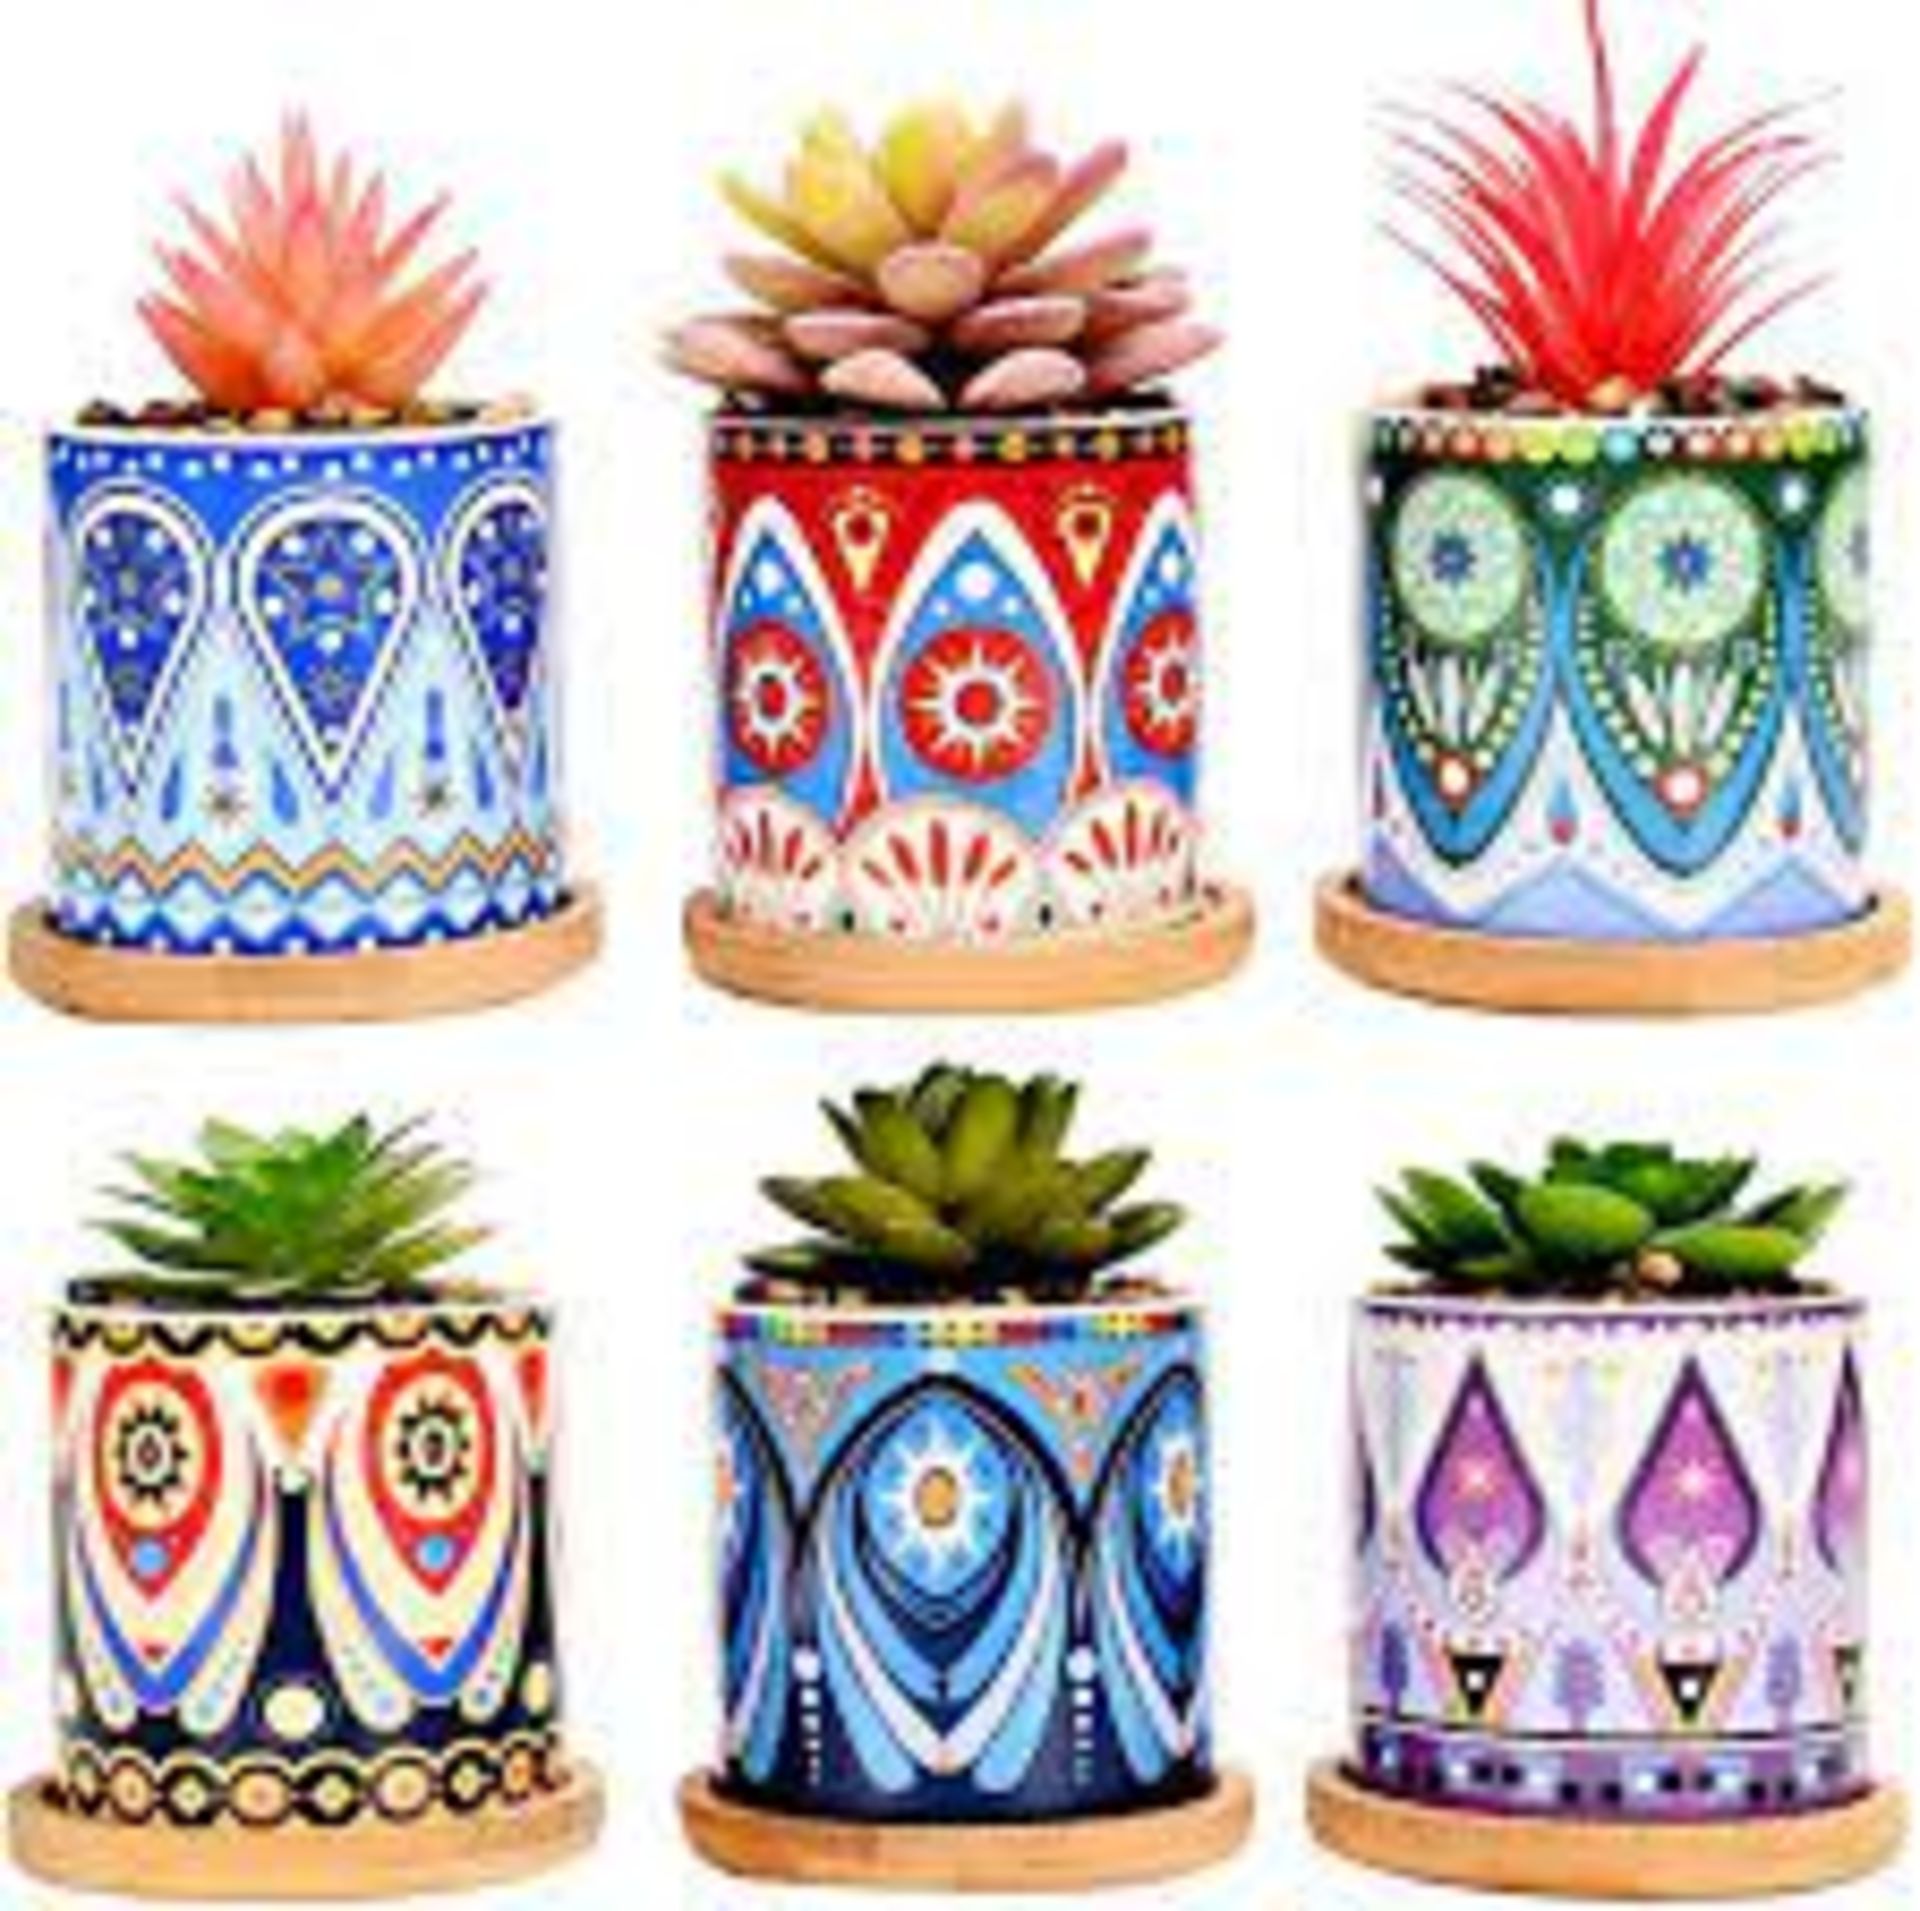 Simpa 6pc Decorative Mixed Pattern Ceramic Plant Pots. - ER47